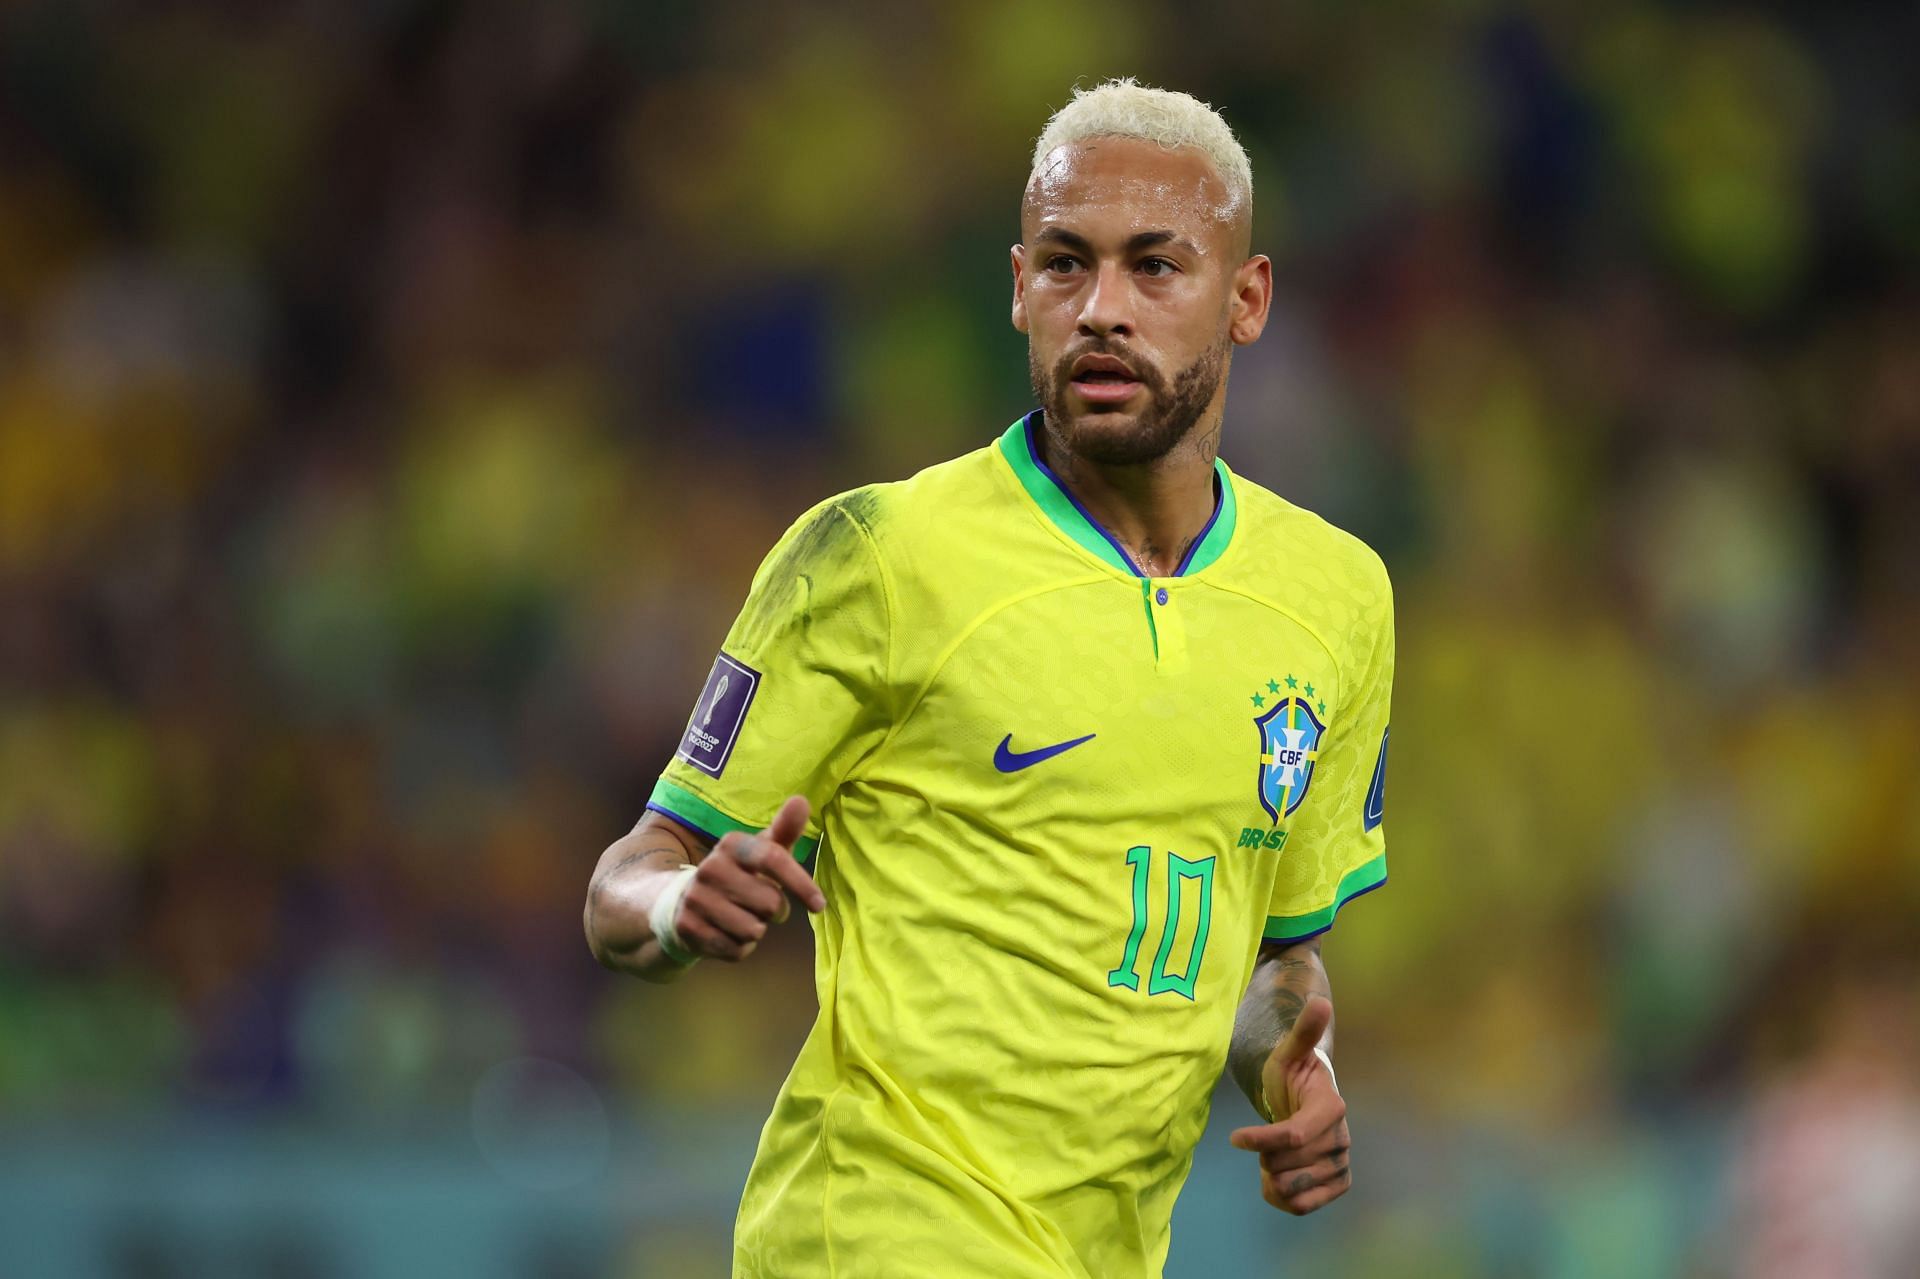 Neymar could leave Paris this summer.